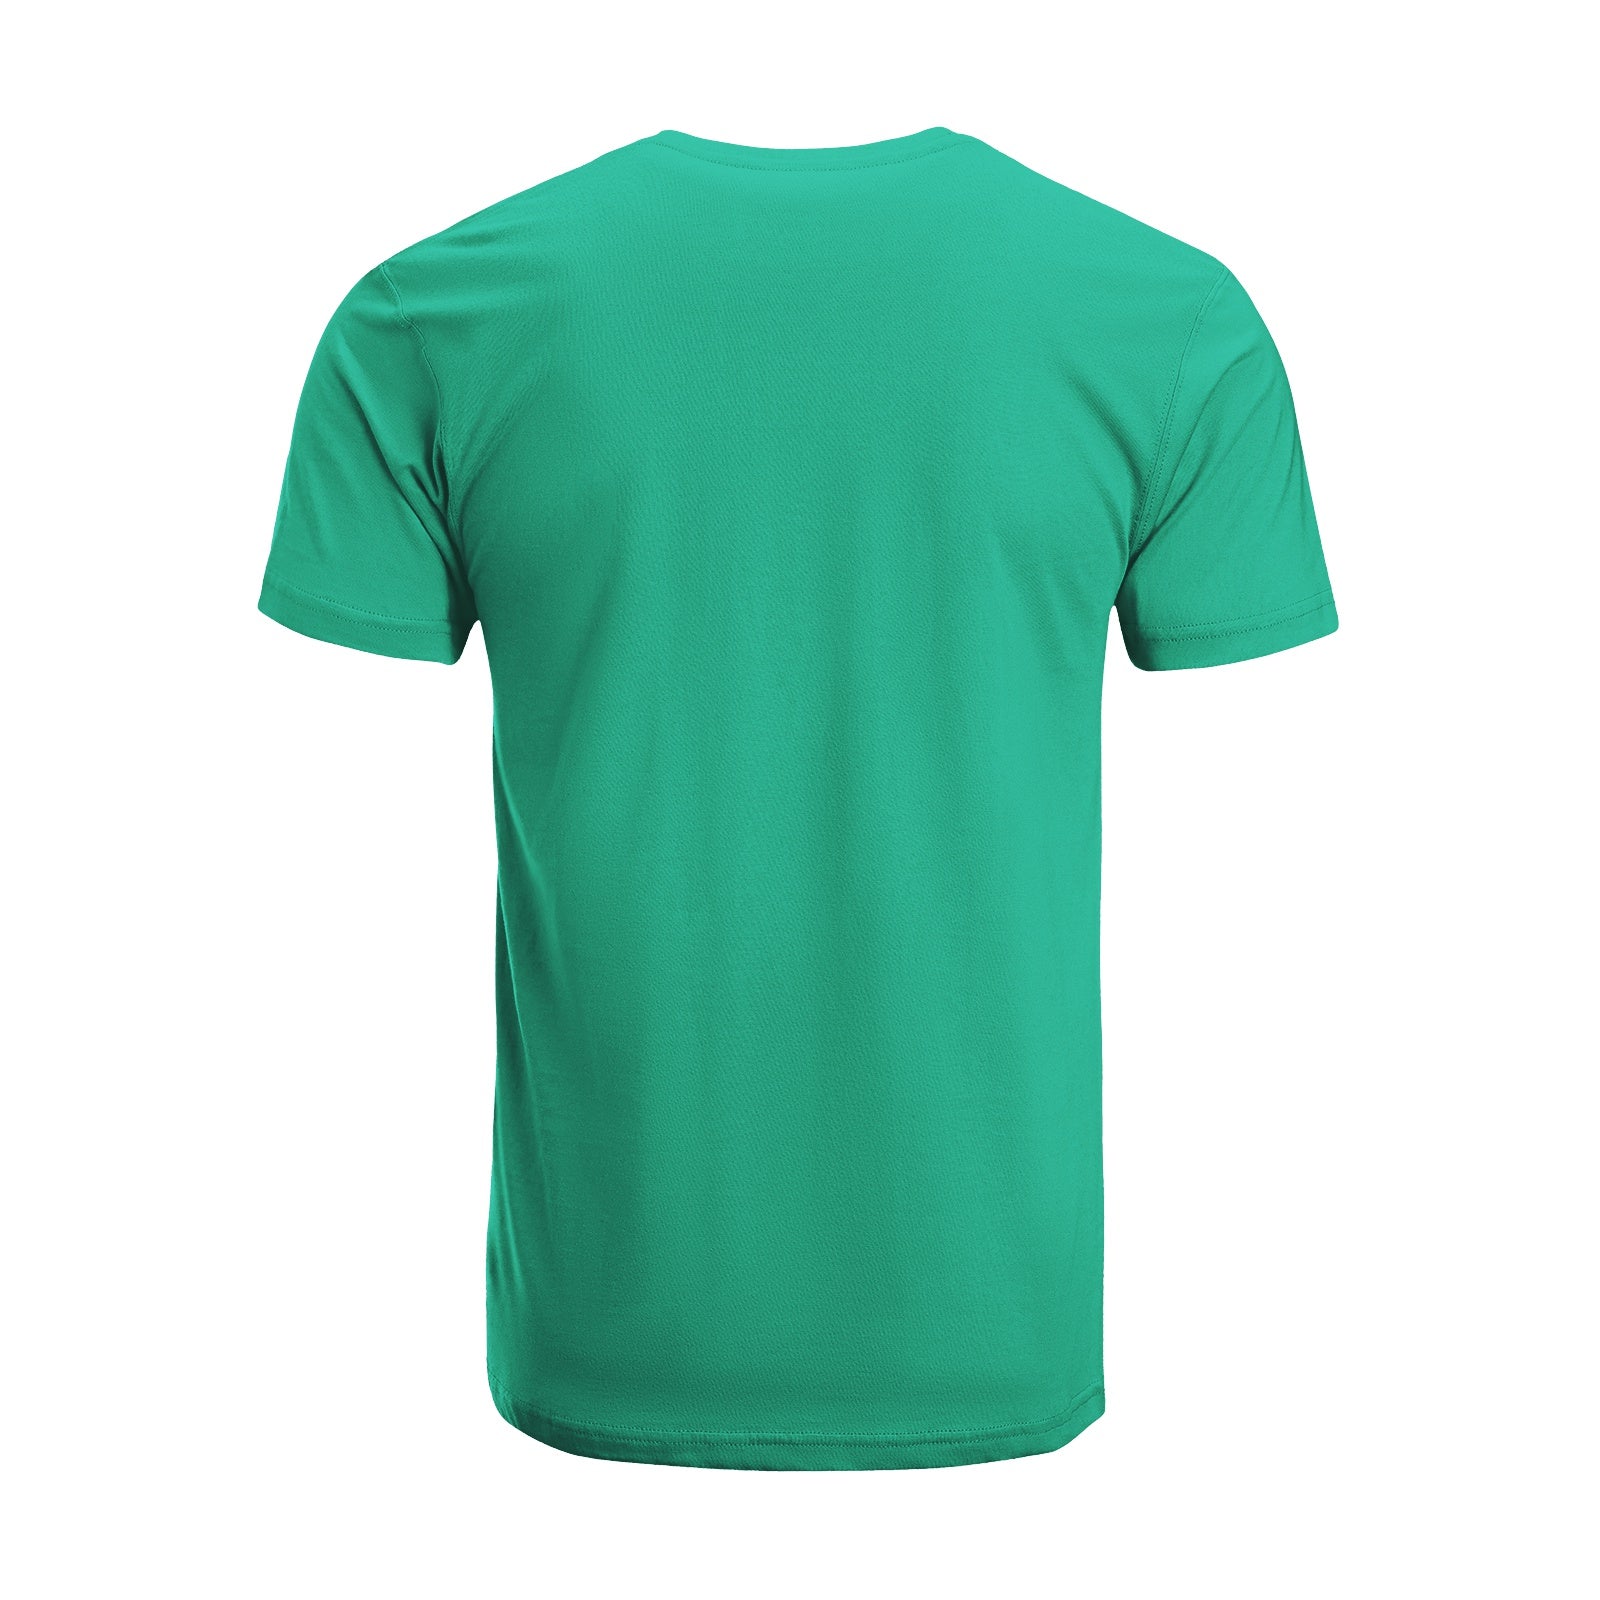 Unisex Short Sleeve Crew Neck Cotton Jersey T-Shirt CAT 11 - Tara-Outfits.com